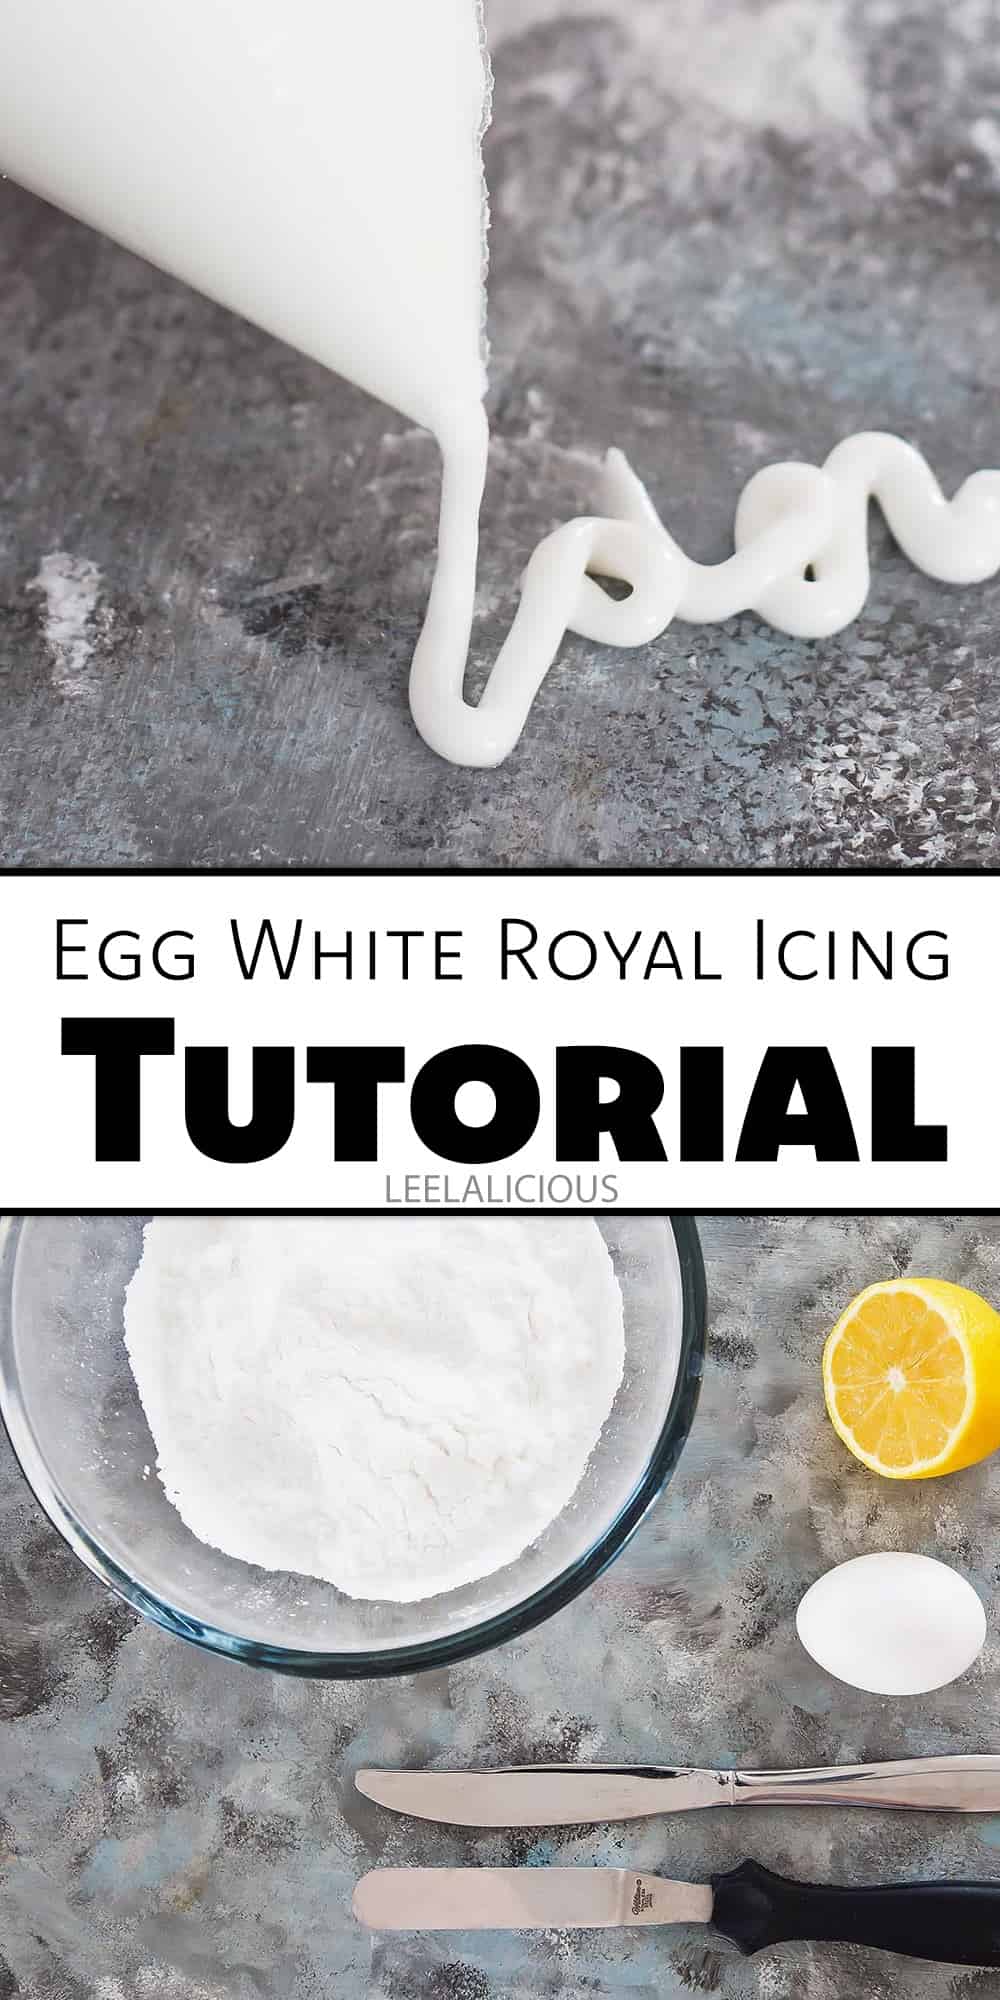 Egg White Royal Icing tutorial